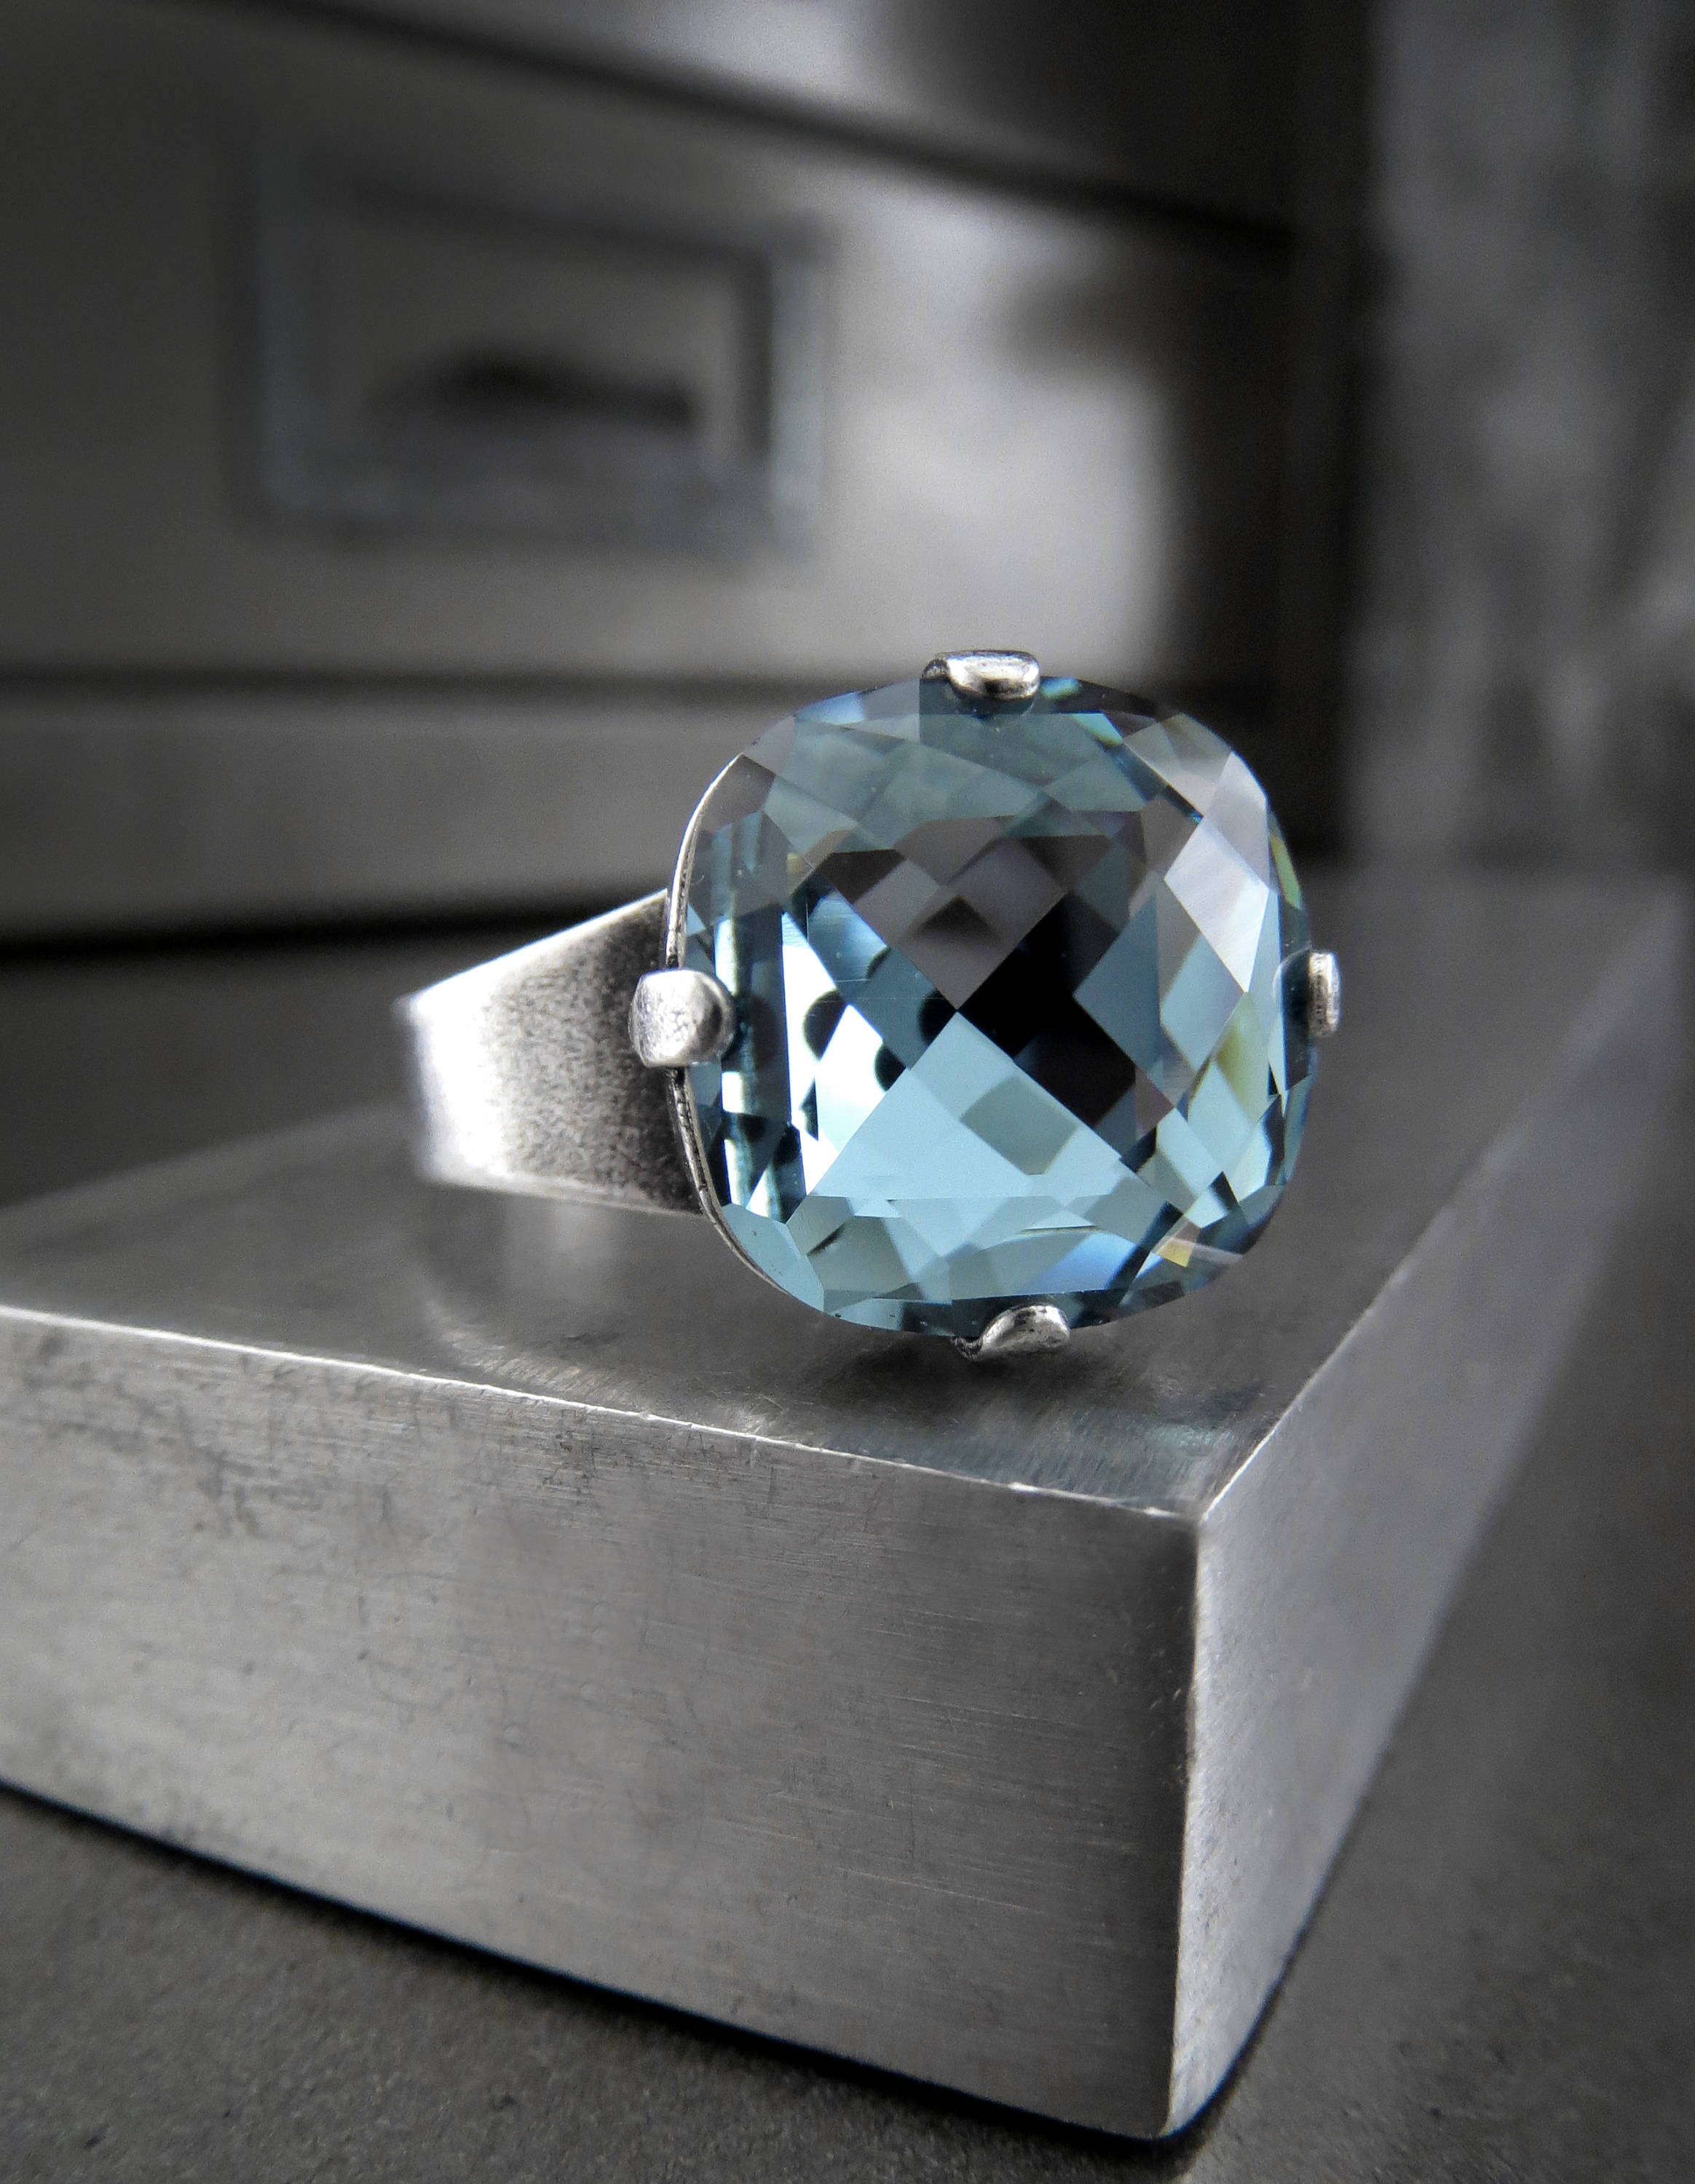 Slate Blue Swarovski Crystal Ring - Cushion Cut Square Crystal Ring